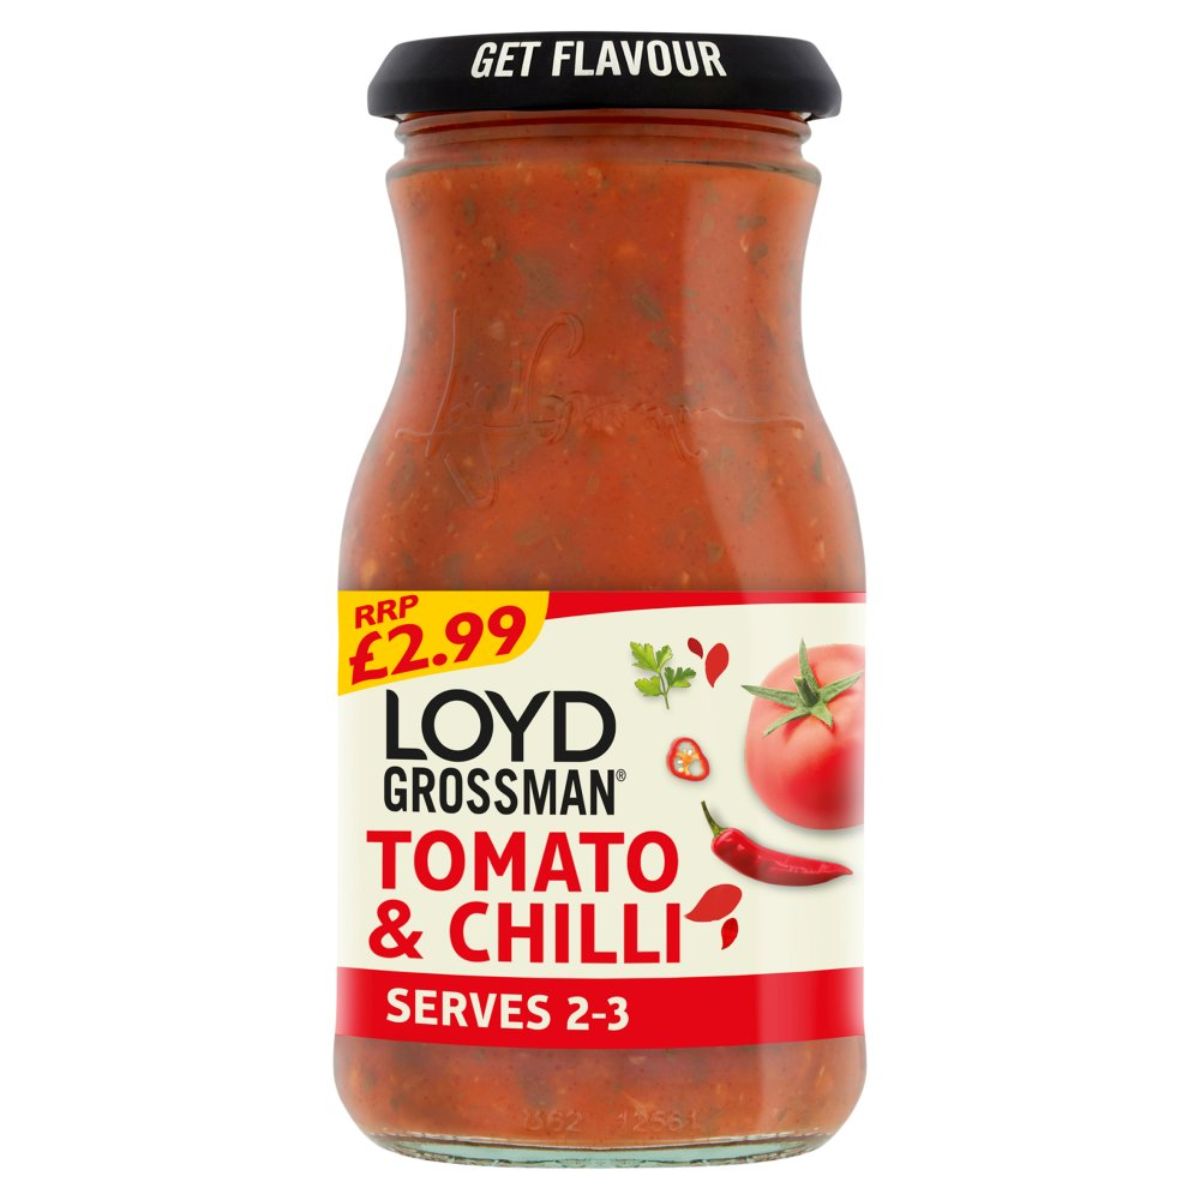 Loyd Grossman - Tomato & Chilli Pasta Sauce - 350g.